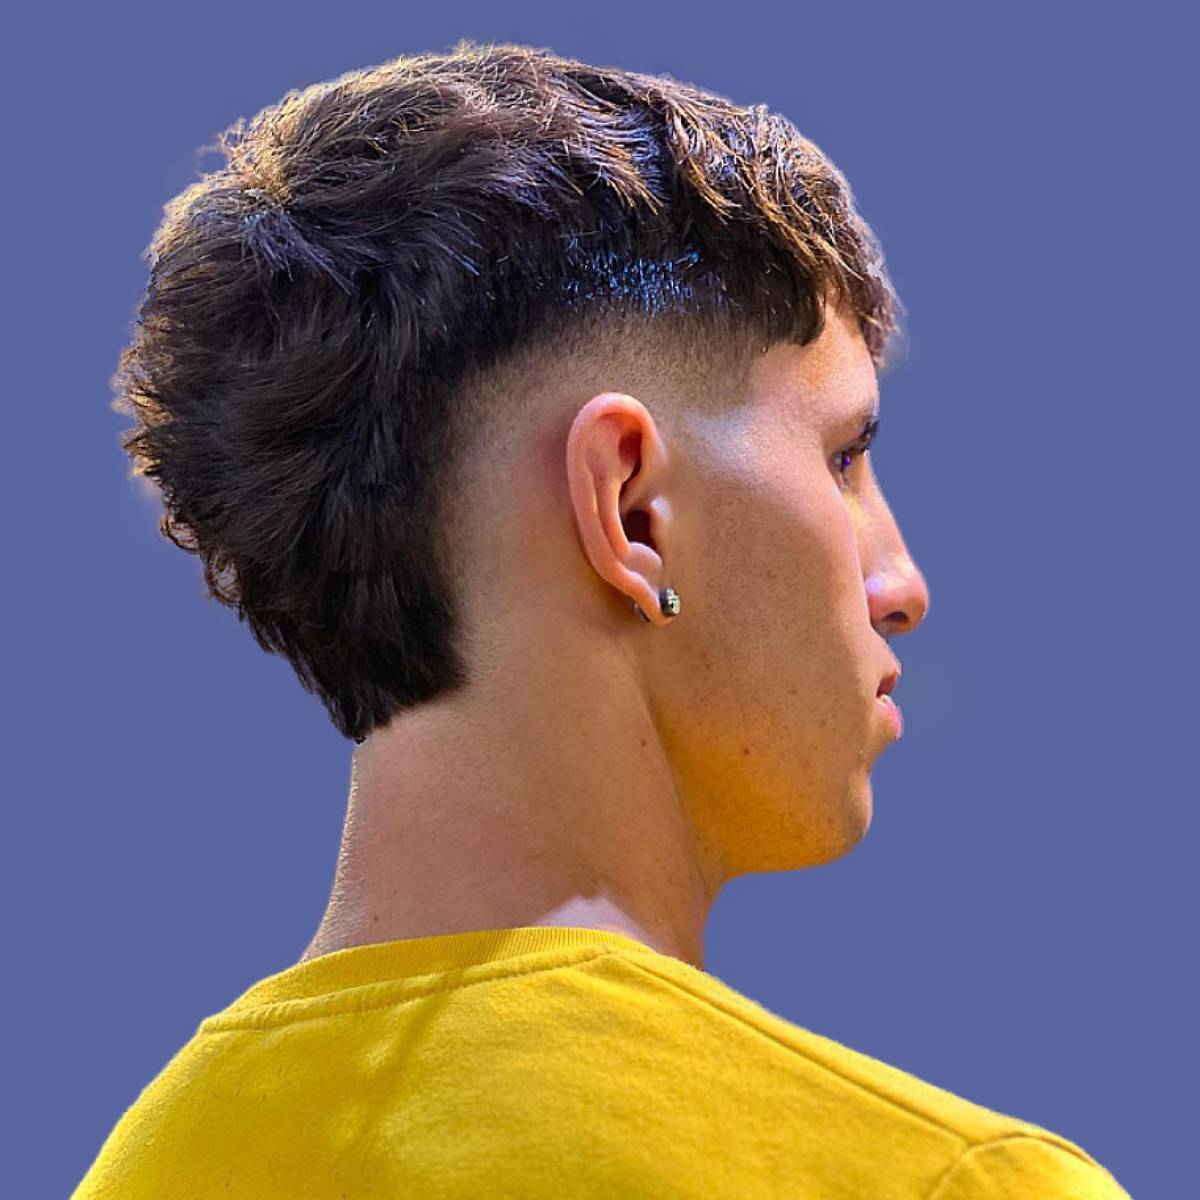 Fade Cut Men's Haircut: Low Fade, Mid Fade, High Fade & More